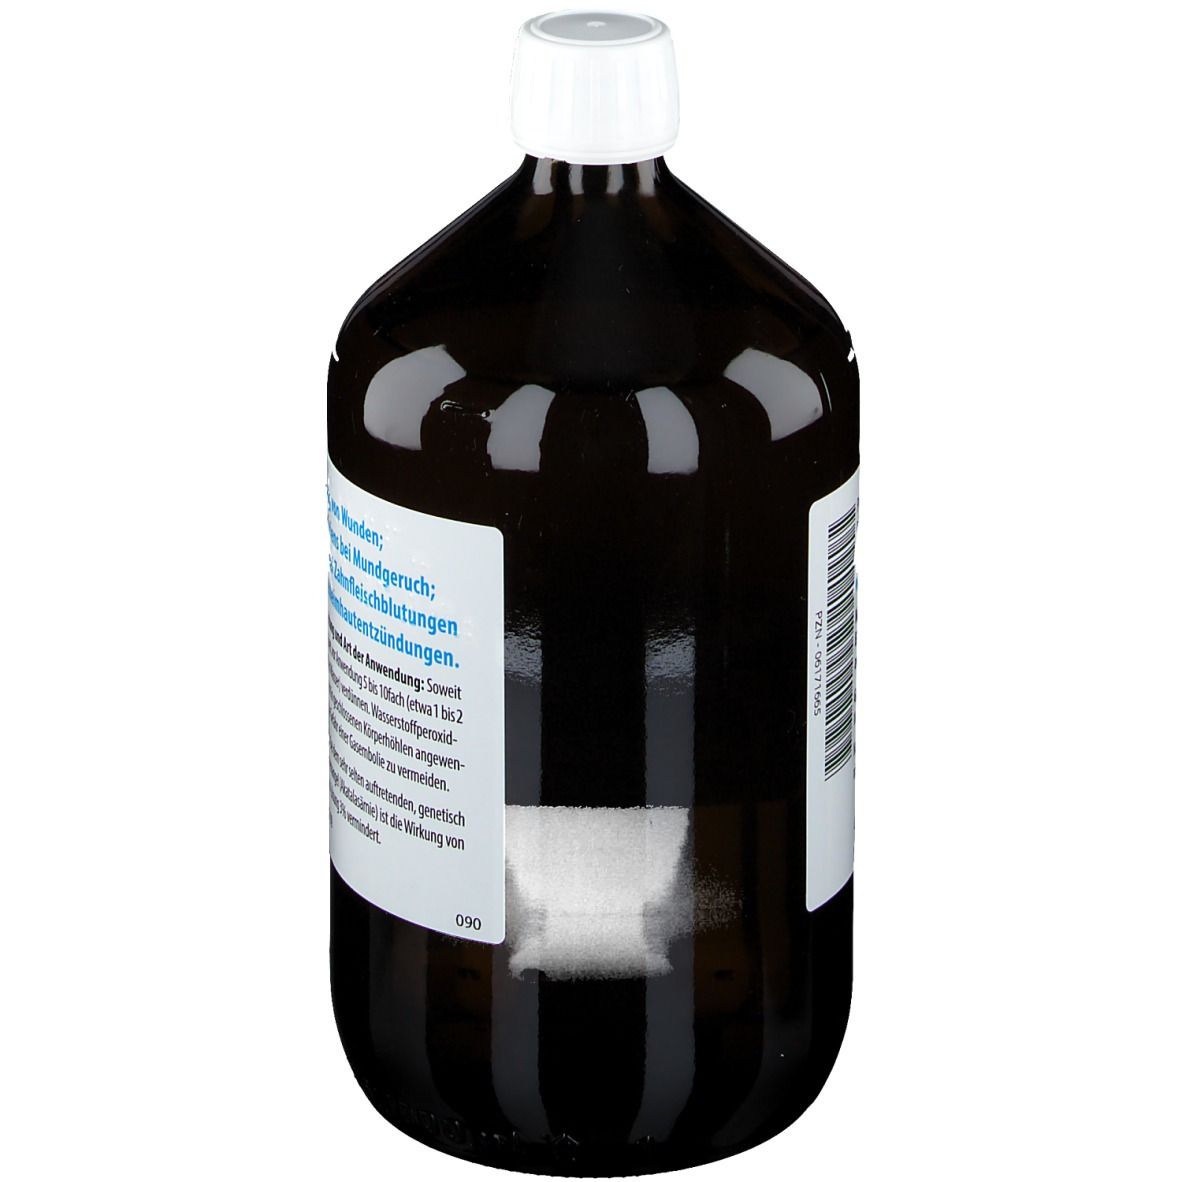 apomix® Wasserstoffperoxid-Lösung 3 %